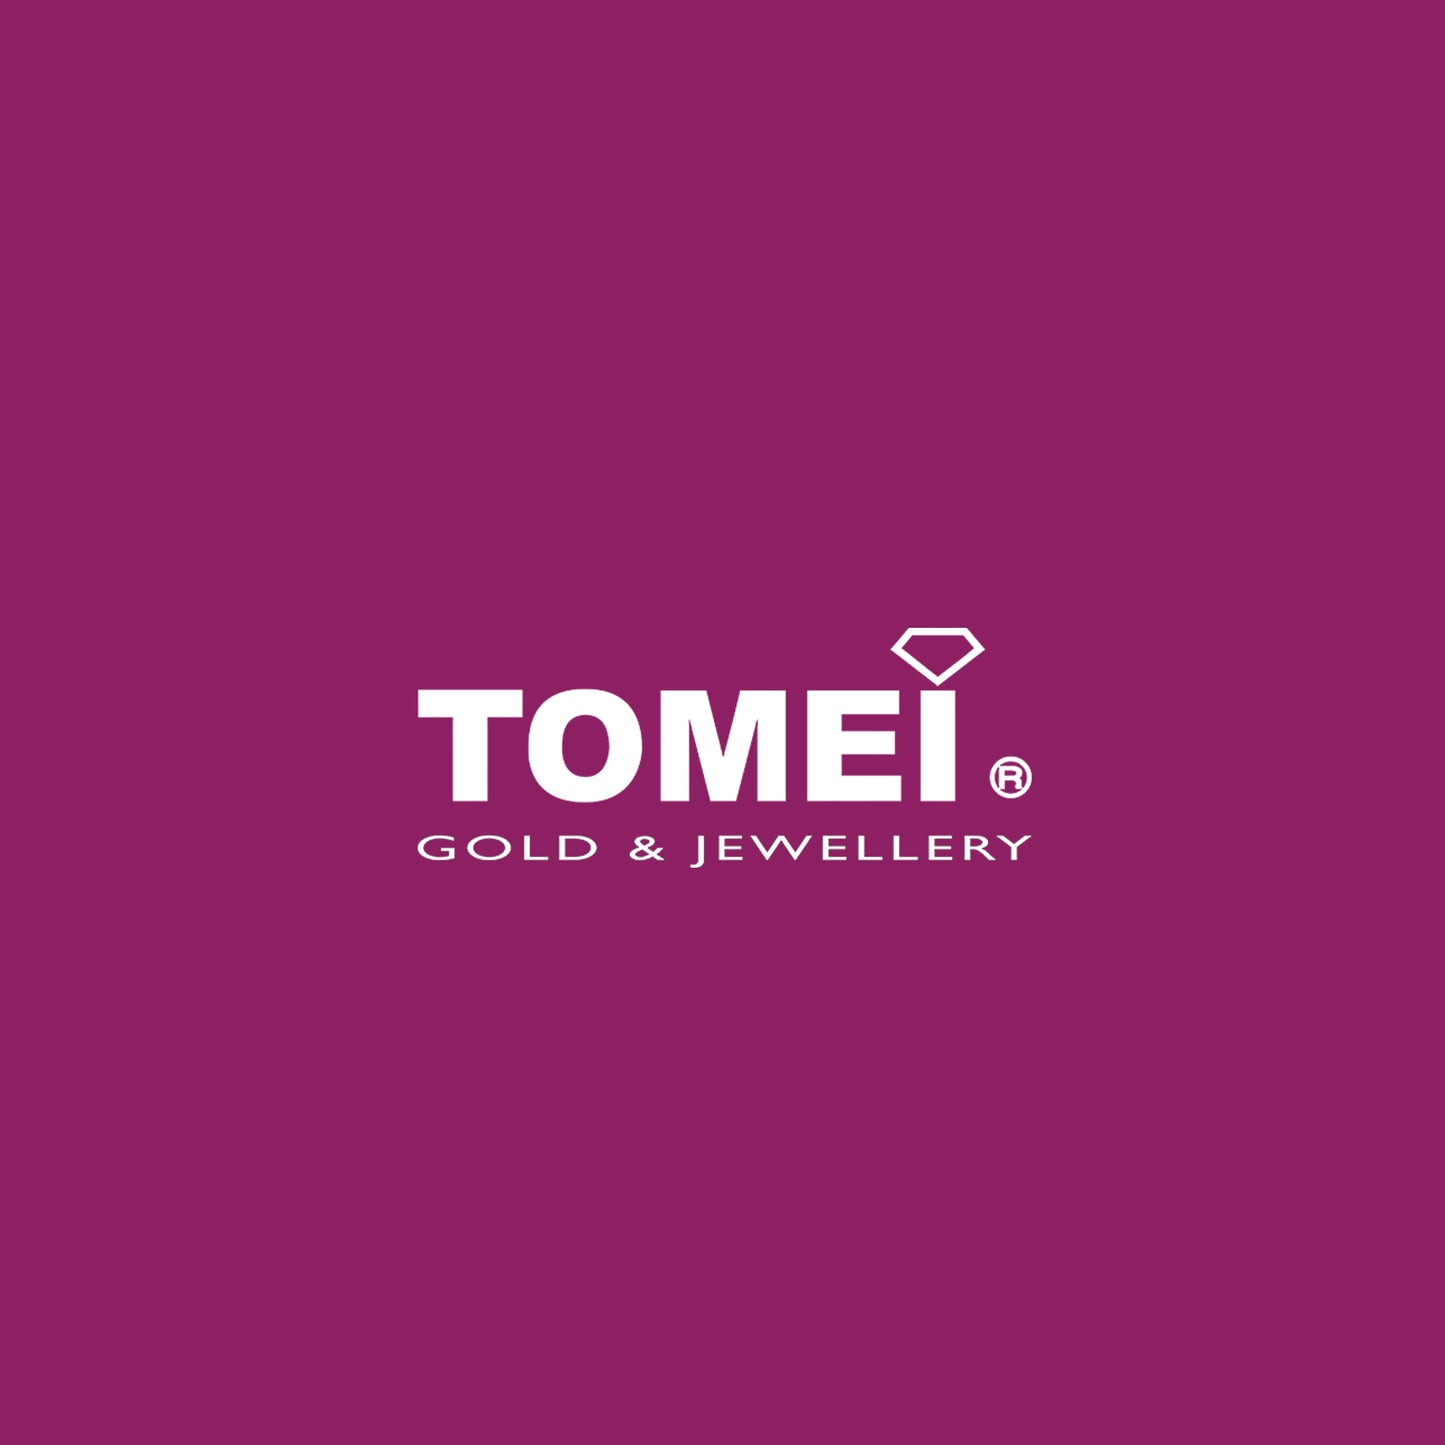 TOMEI Ring, Diamond Yellow Gold 750 (R1056)